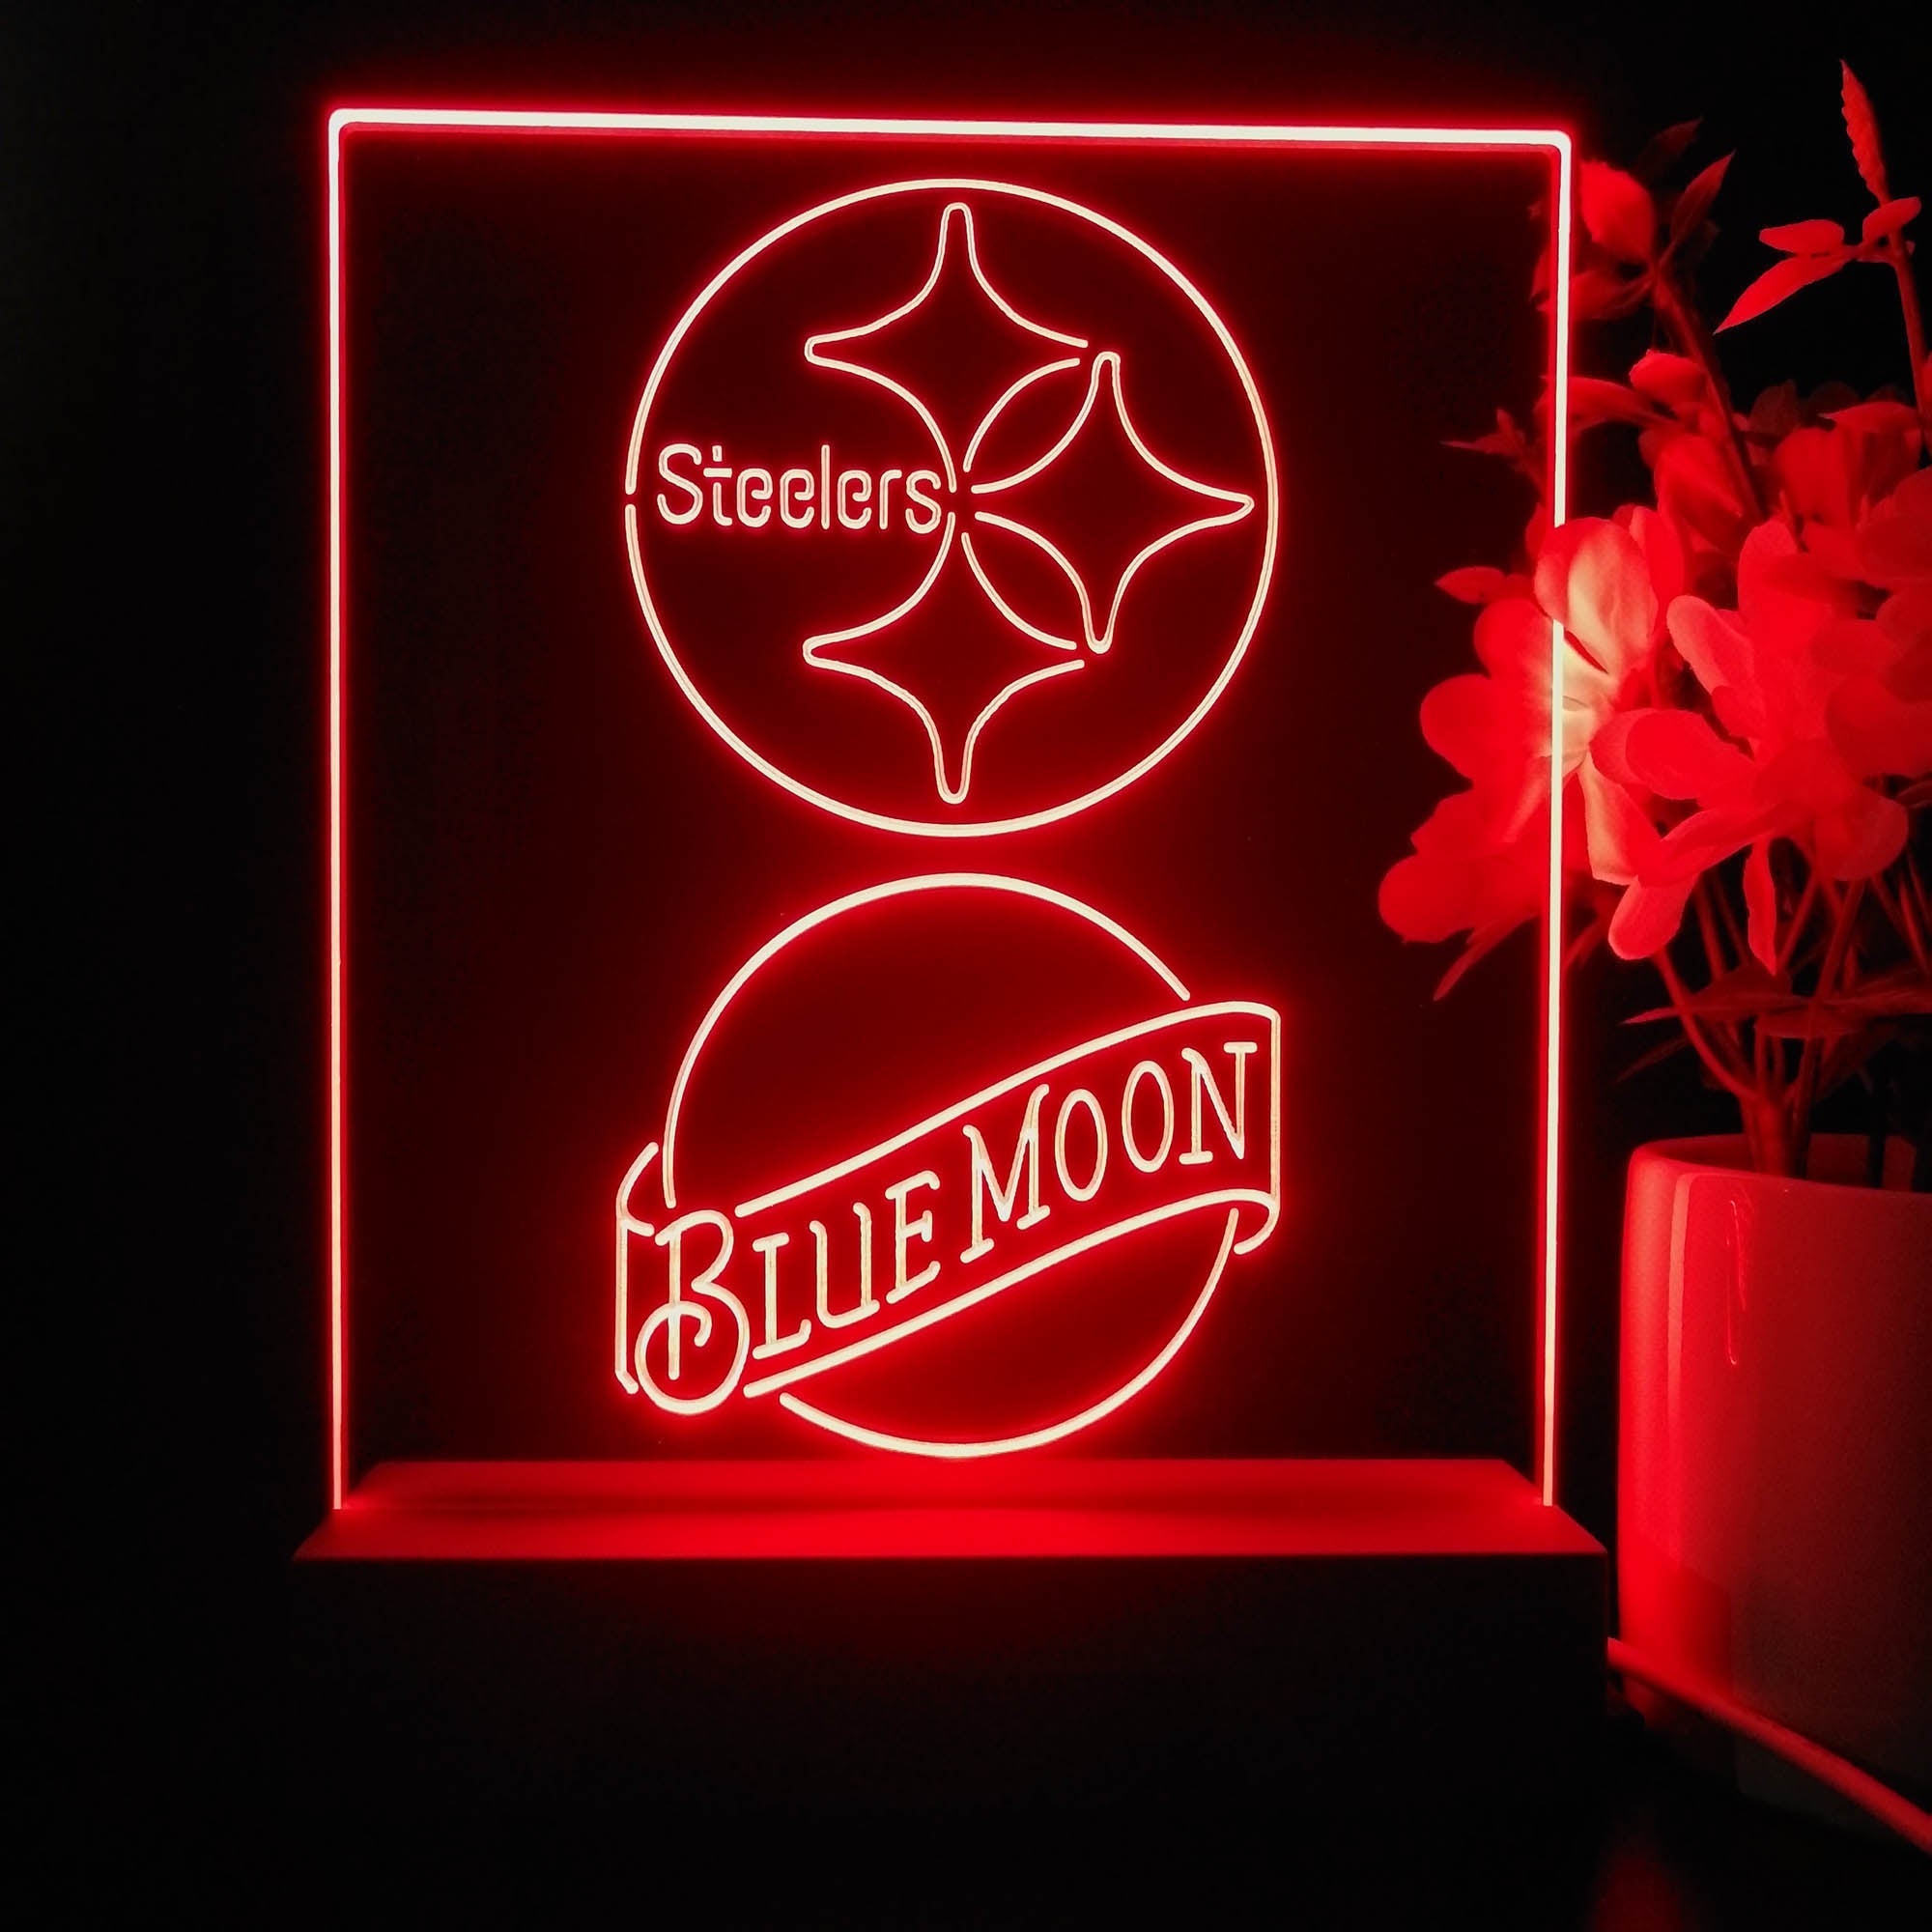 Pittsburgh Steelers Blue Moon Neon Sign Pub Bar Lamp